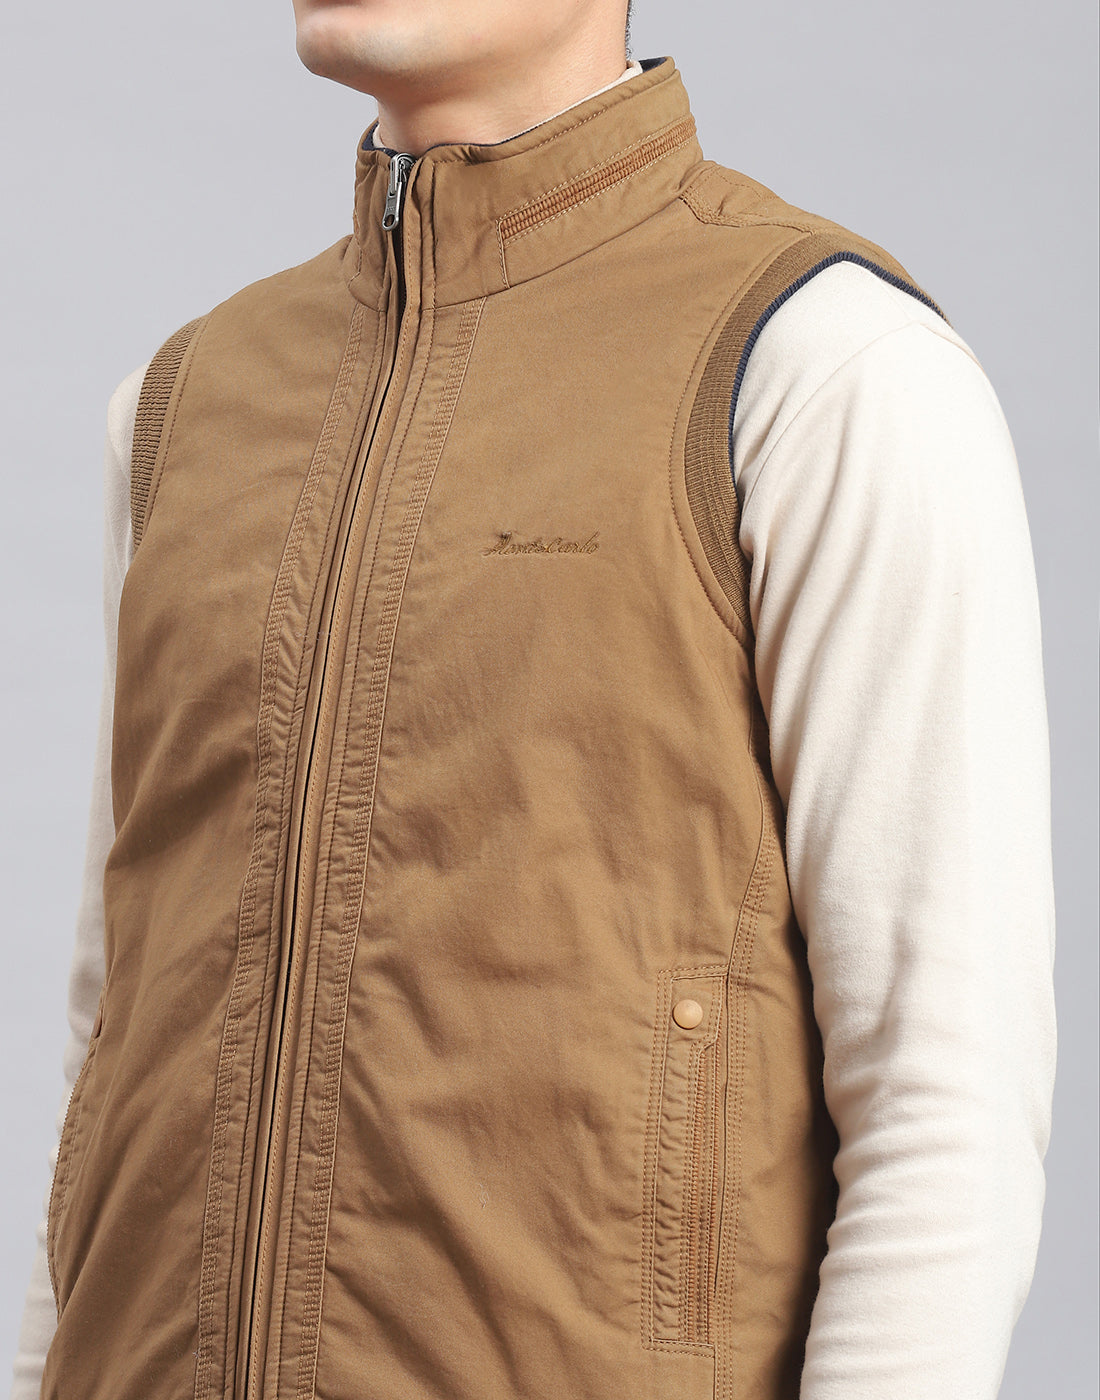 Men's Jackets & Coats Online: Low Price Offer on Jackets & Coats for Men -  AJIO